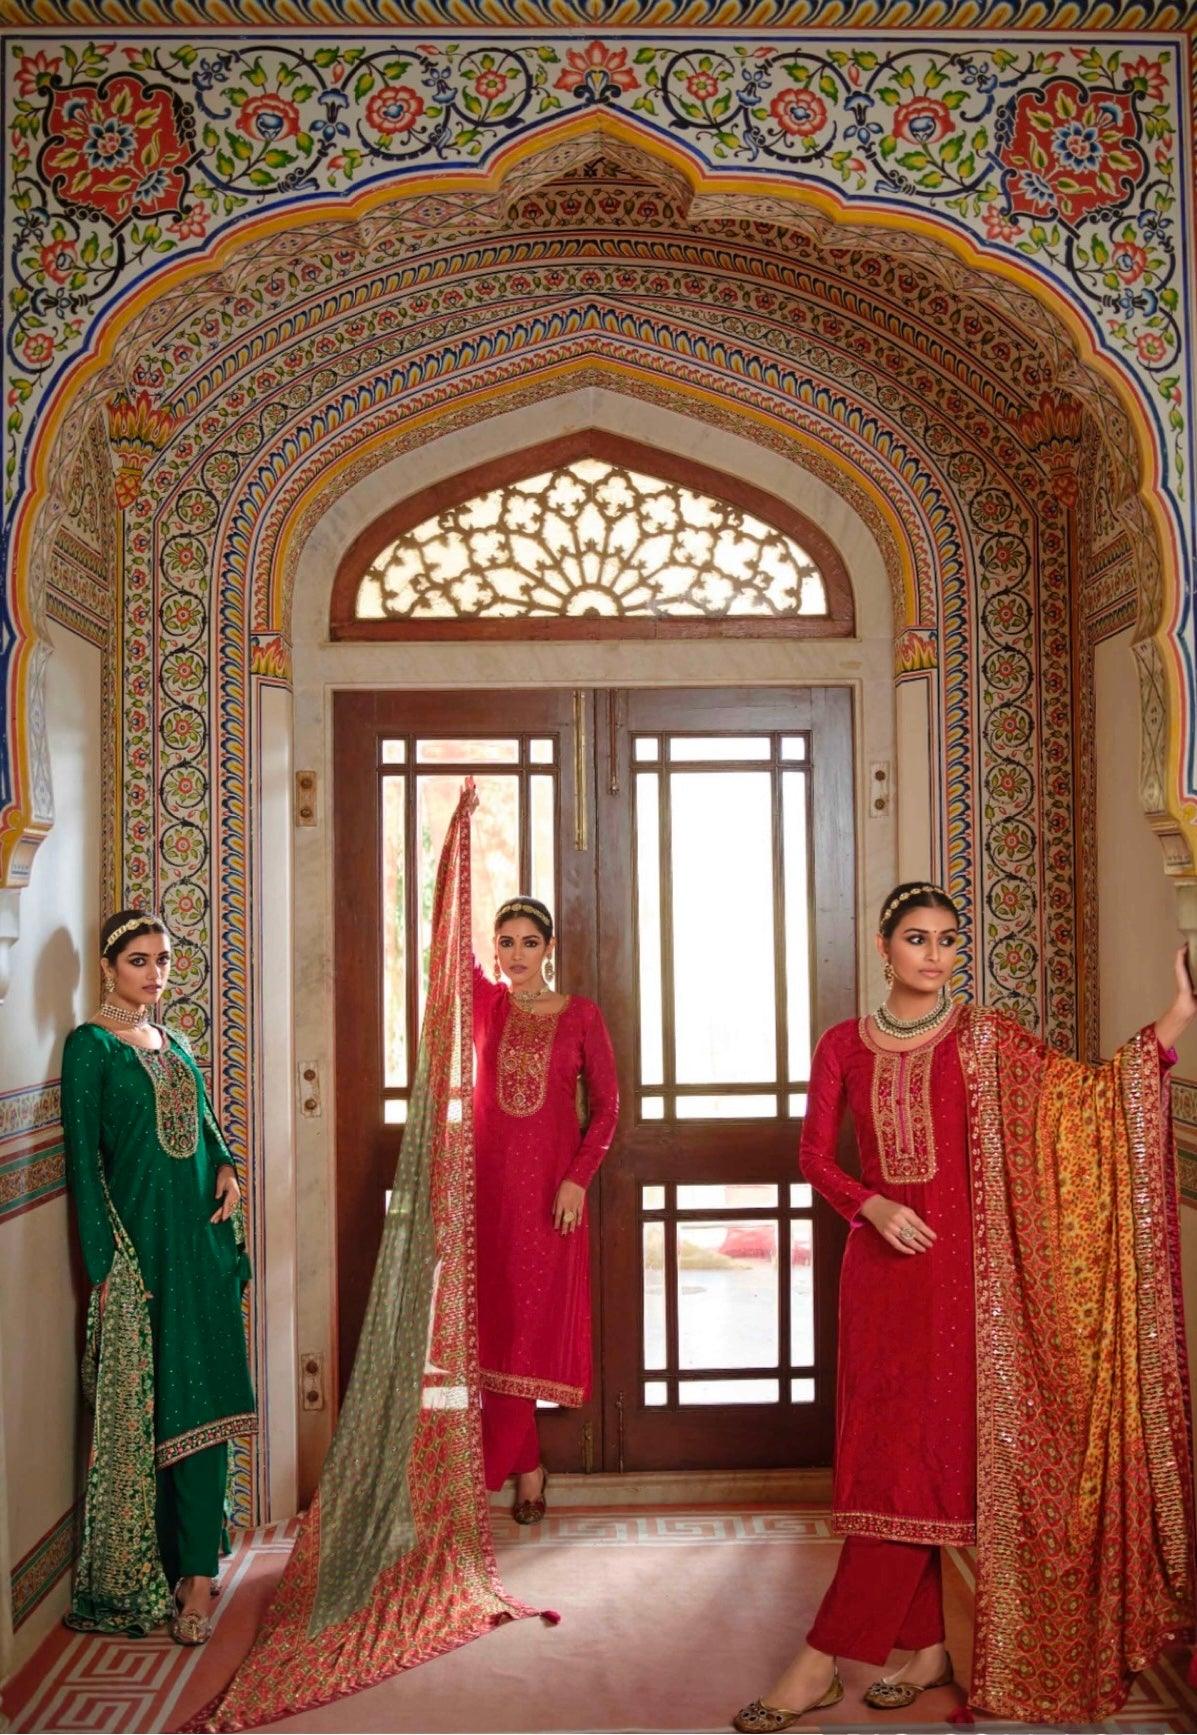 Crimson Red jacquard silk shirt with embroidery shalwar Kameez suit dress with Chiffon Dupatta, M L - Diana's Fashion Factory